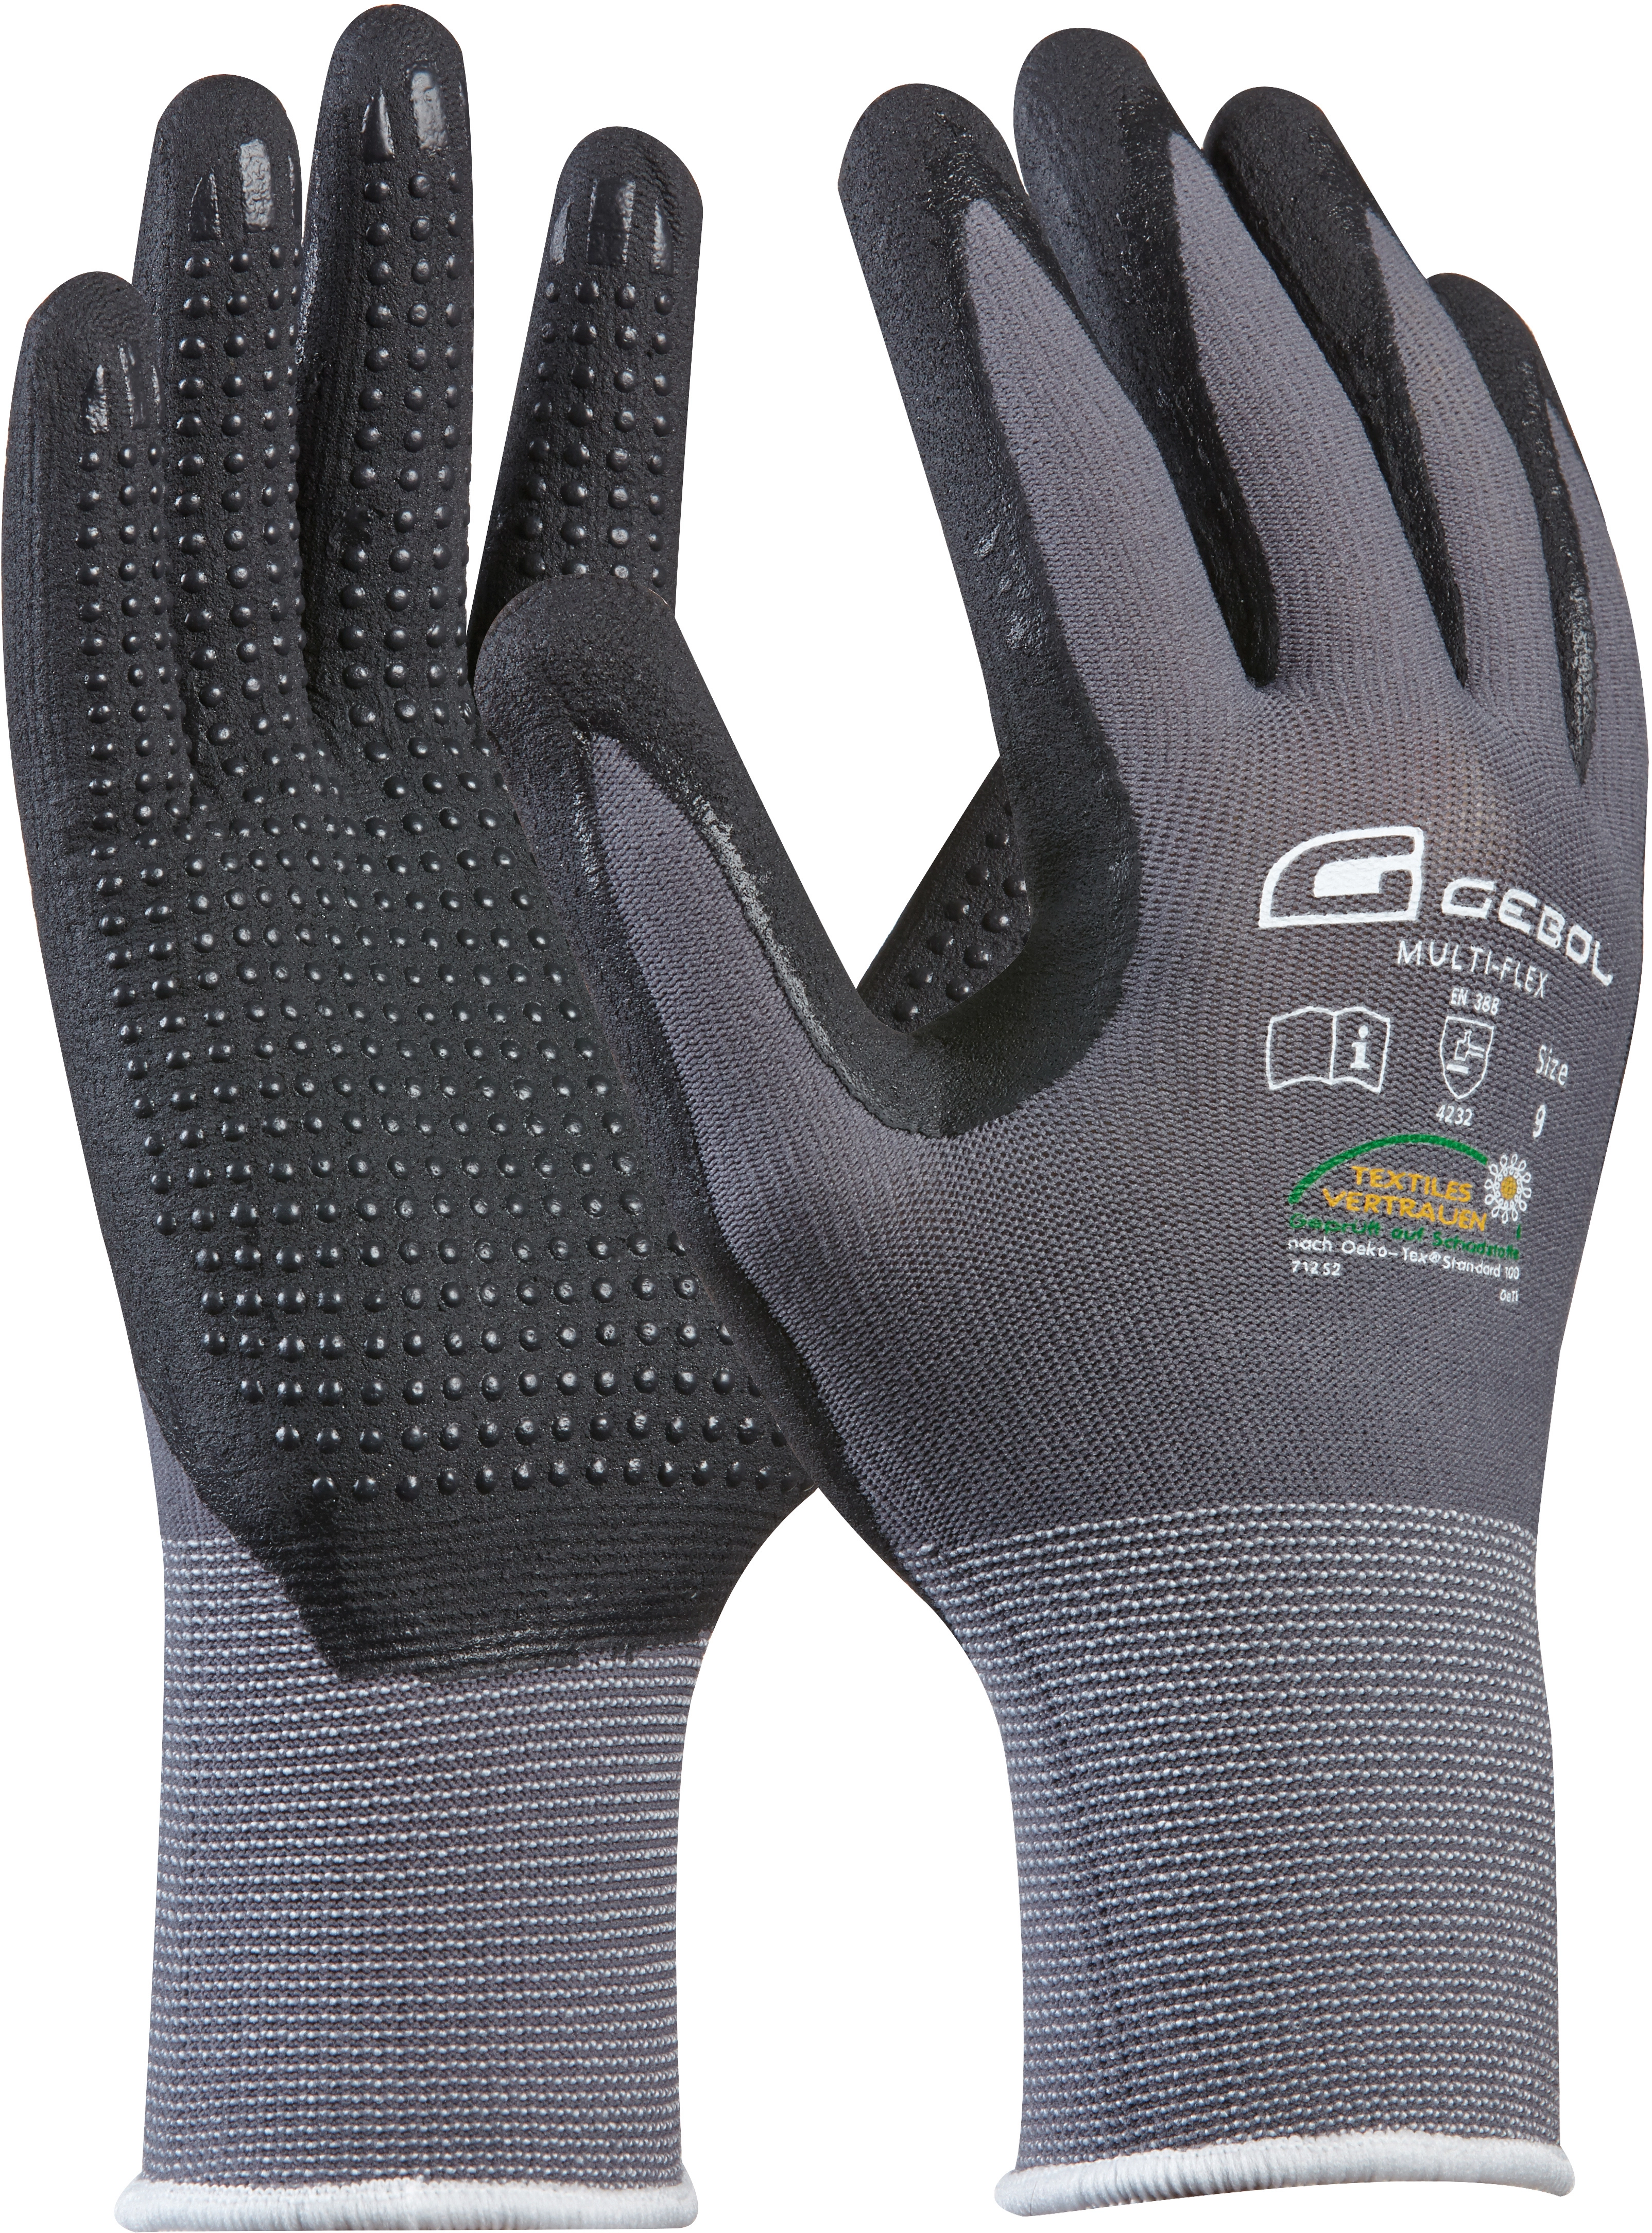 Gebol Handschuh Multi Flex Gr. 8 Grau kaufen bei OBI